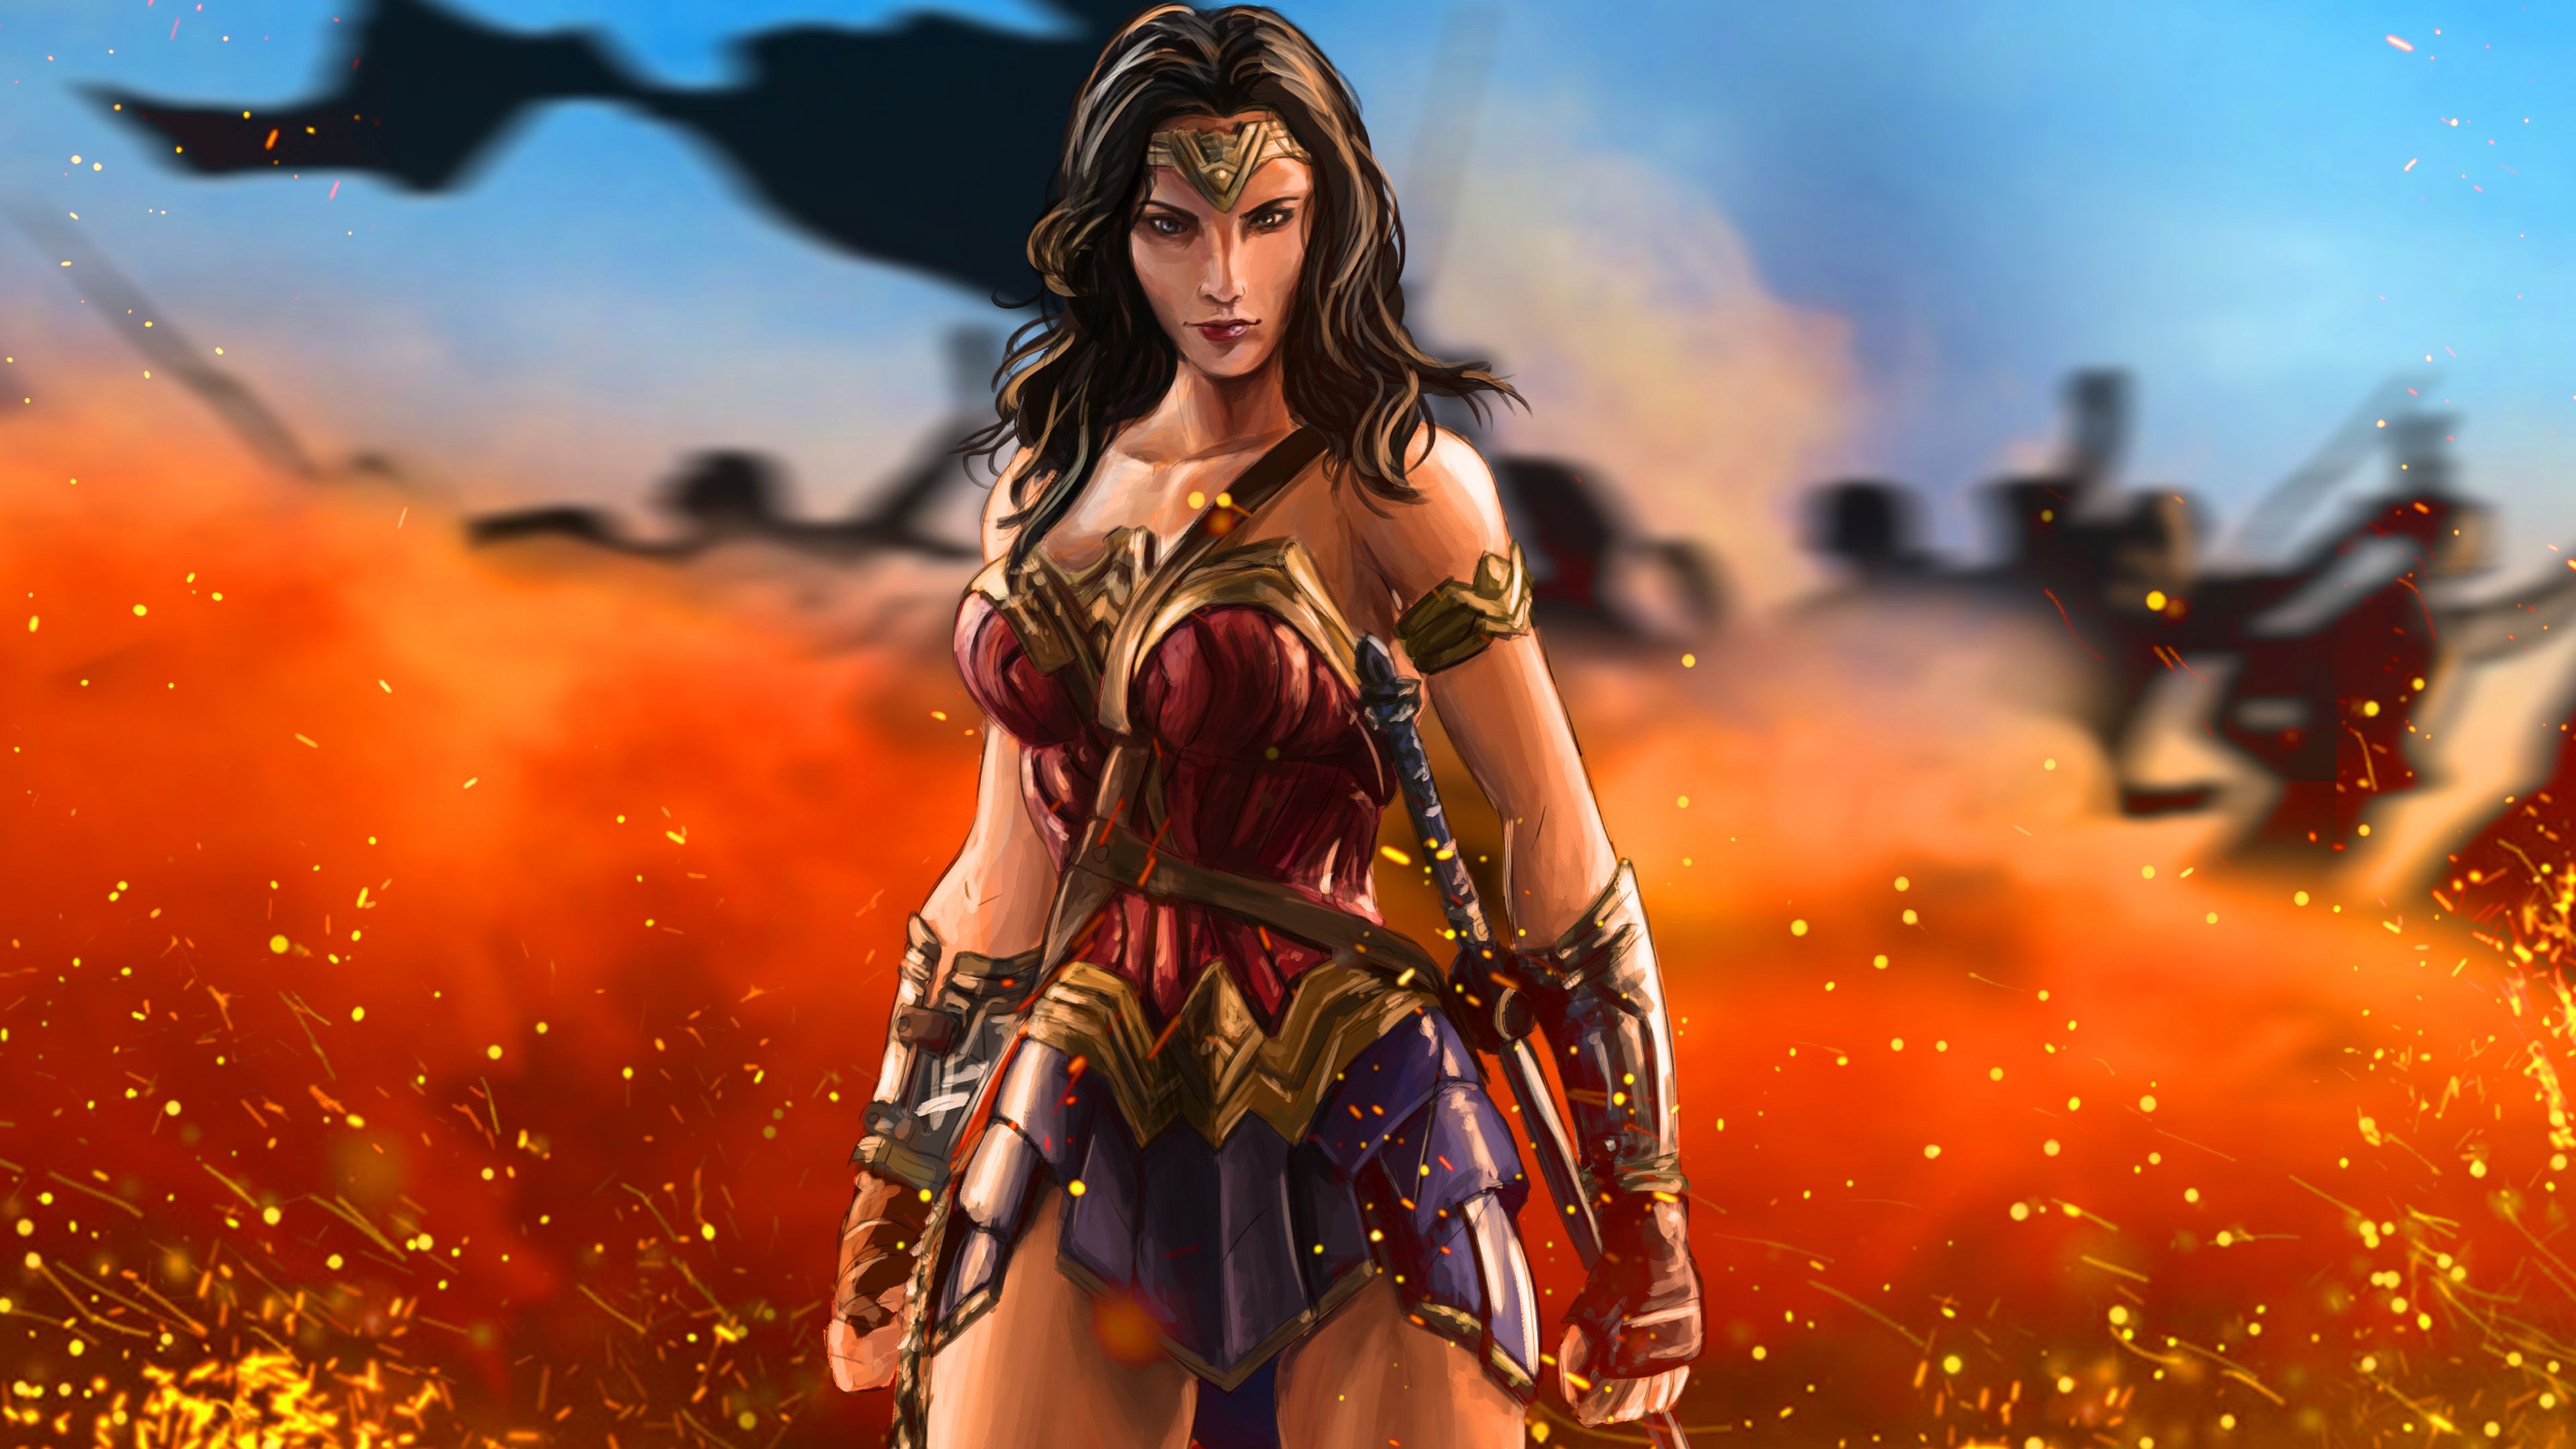 Wonder Woman Warrior Artwork 5k Wonder Woman Wallpaper, Warrior Wallpaper, Superheroes Wallpaper, Hd Wallpaper, D. Warrior Woman, Hero Wallpaper, Wonder Woman